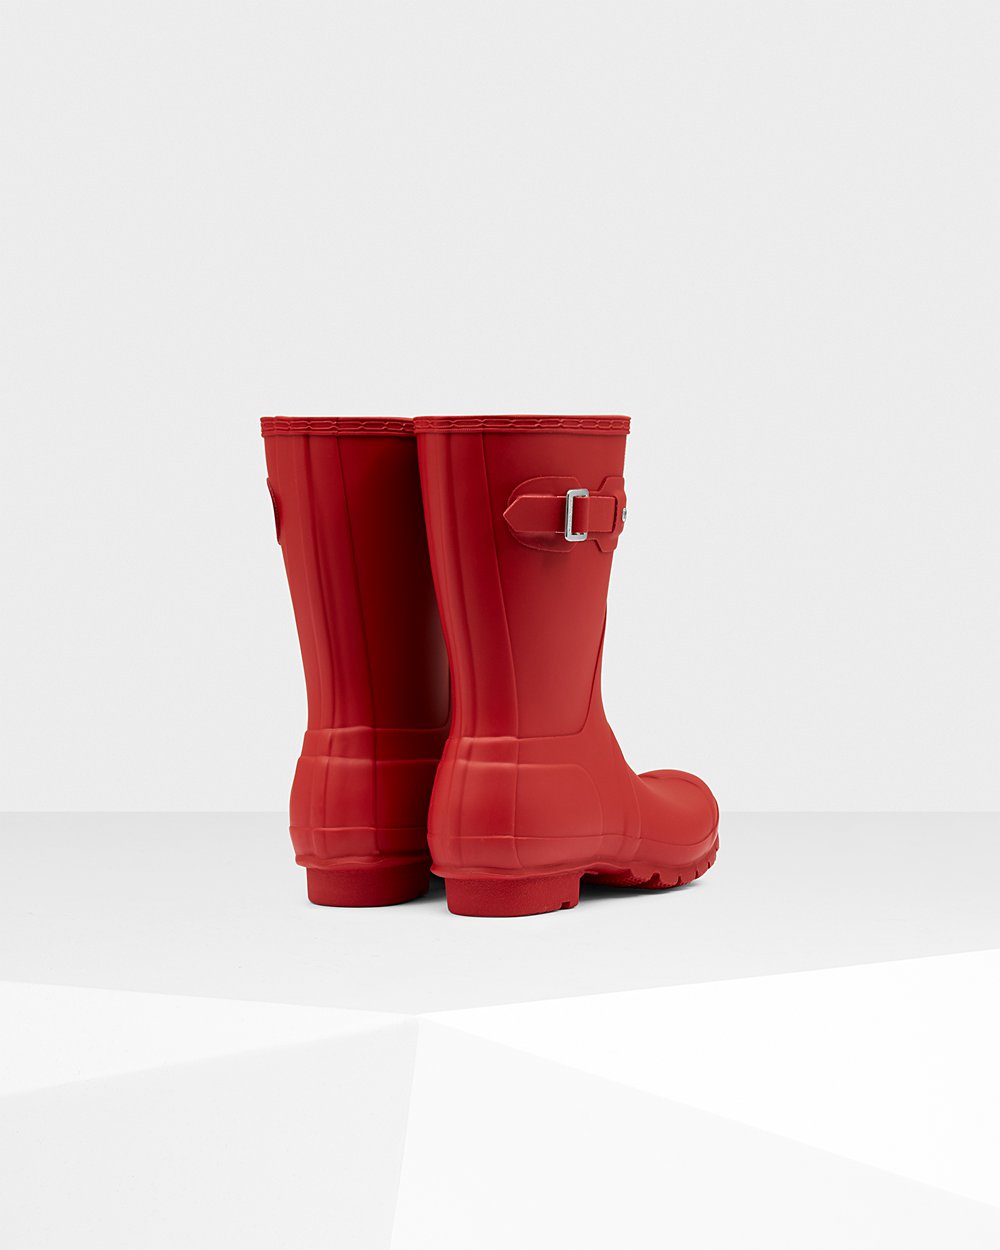 Womens Short Rain Boots - Hunter Original (32FCKSOZQ) - Red